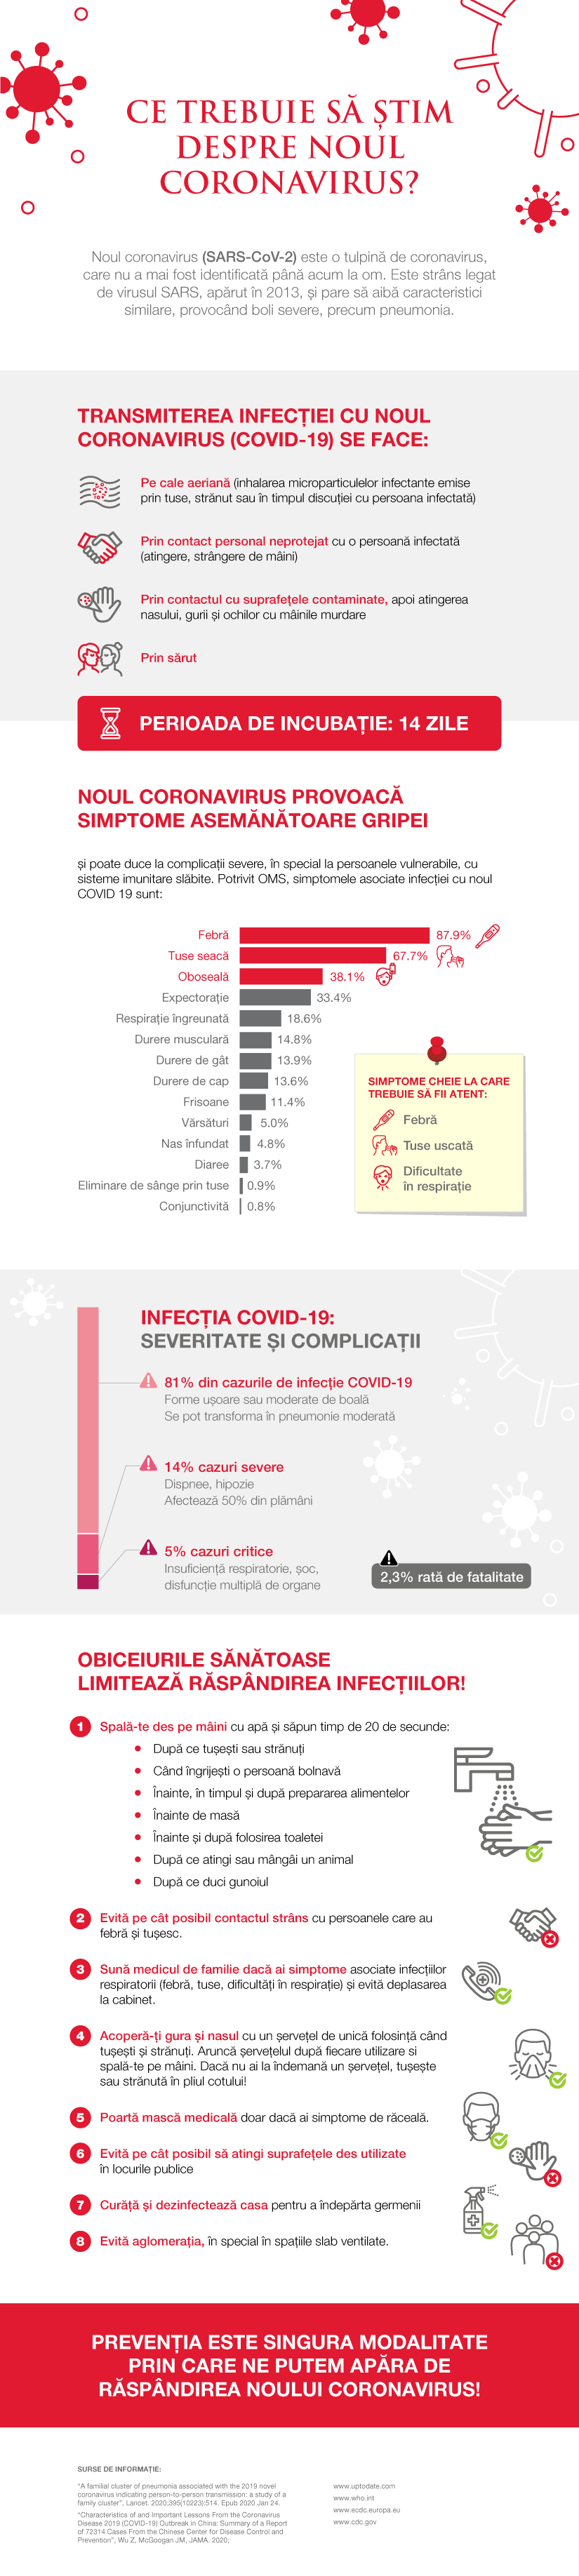 Ce trebuie sa stim despre noul coronavirus? (infografic)